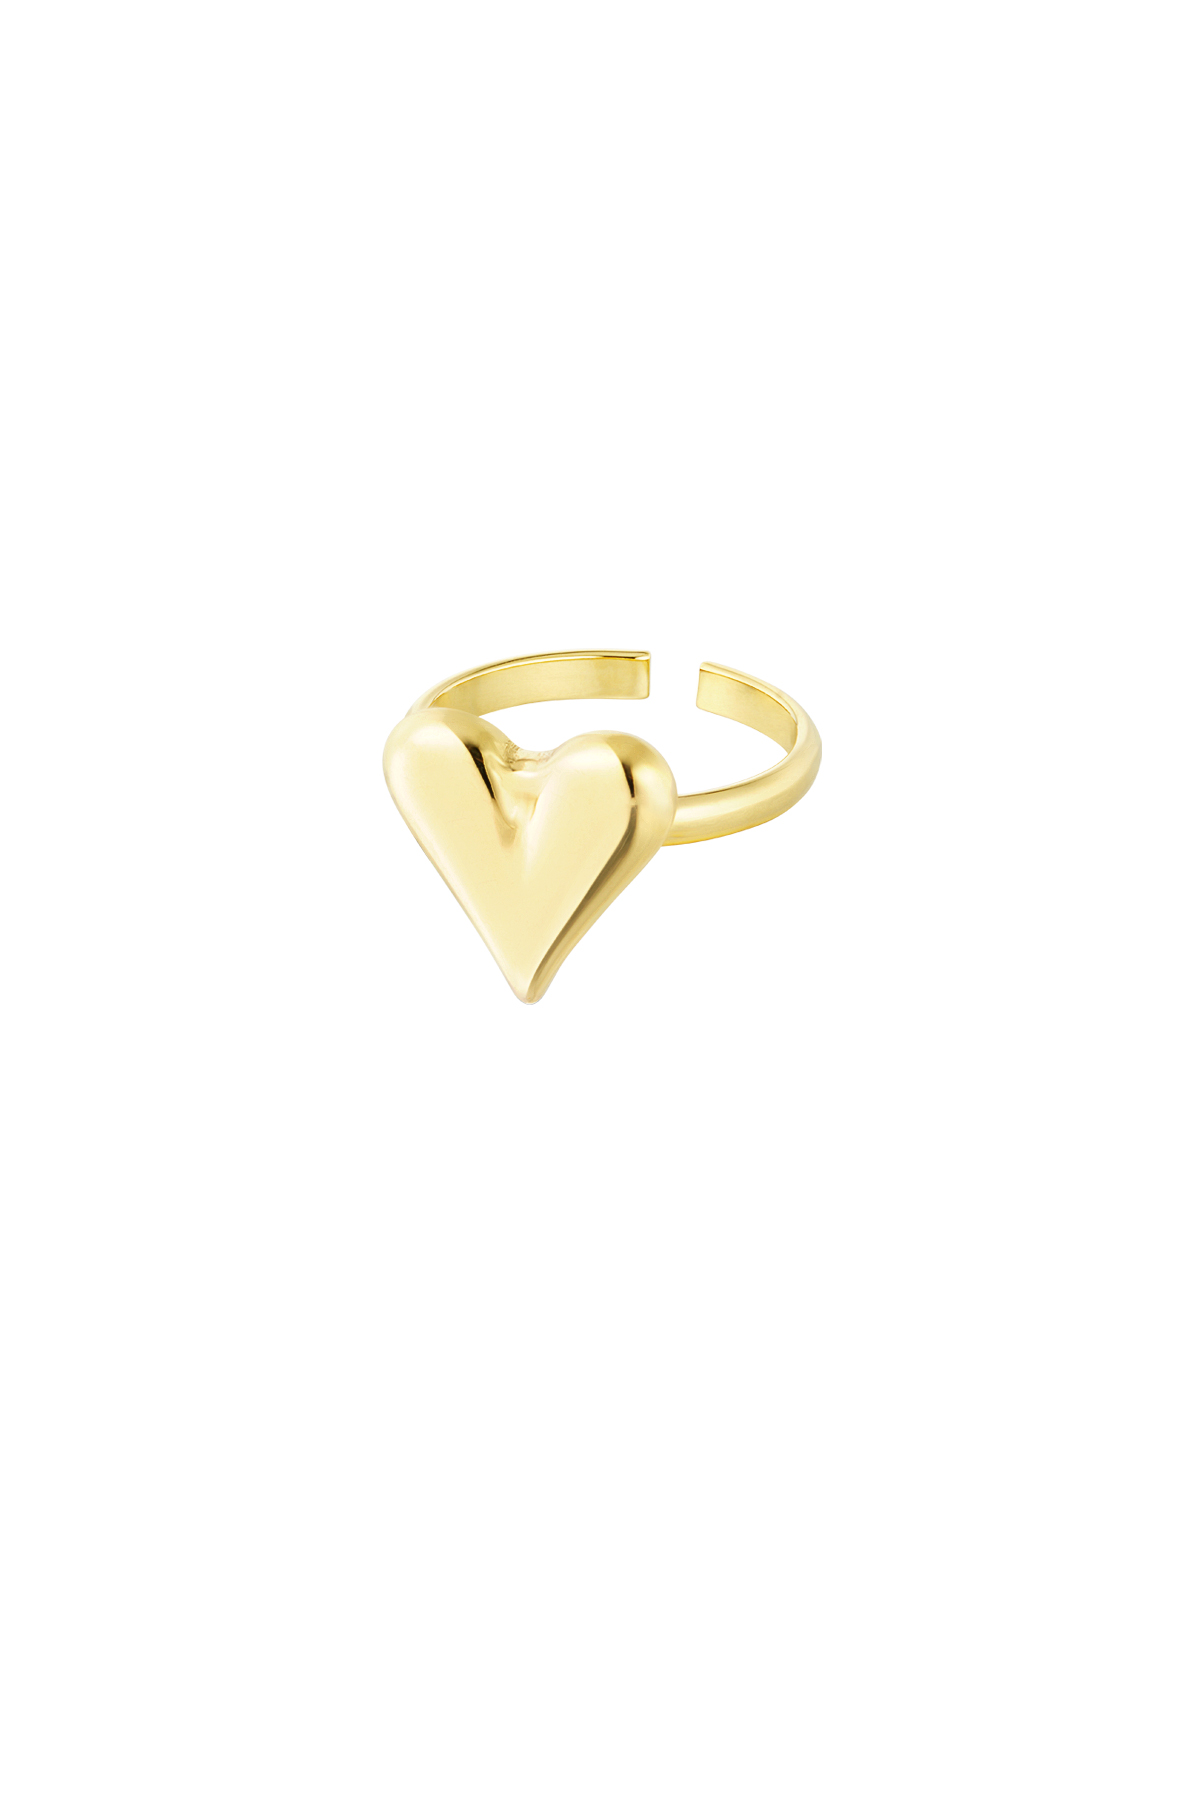 Classy heart ring - gold